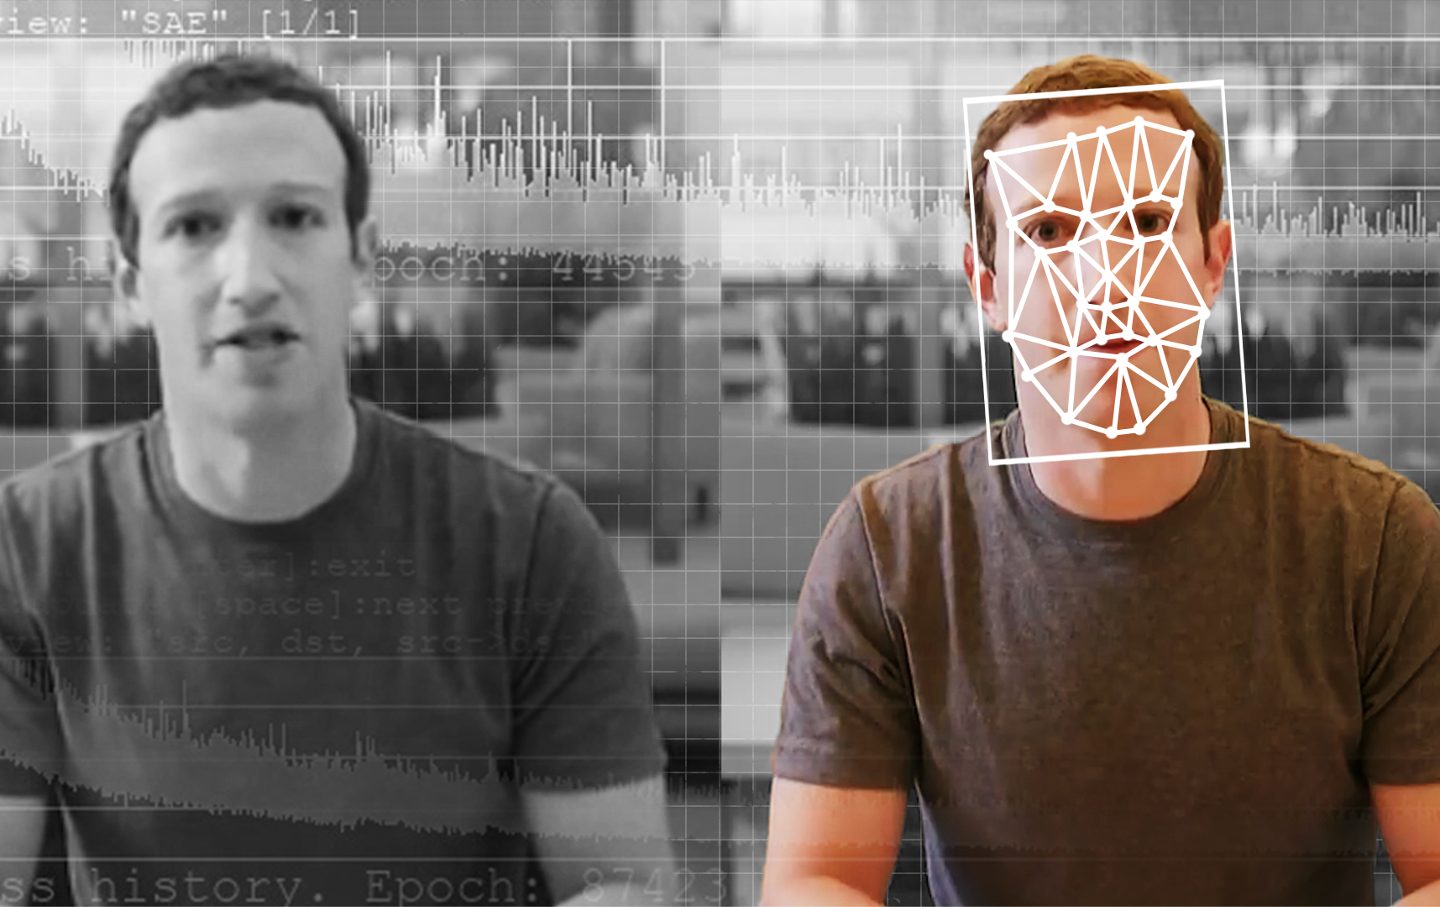 A comparison of an original and deepfake video of Facebook CEO Mark Zuckerberg.